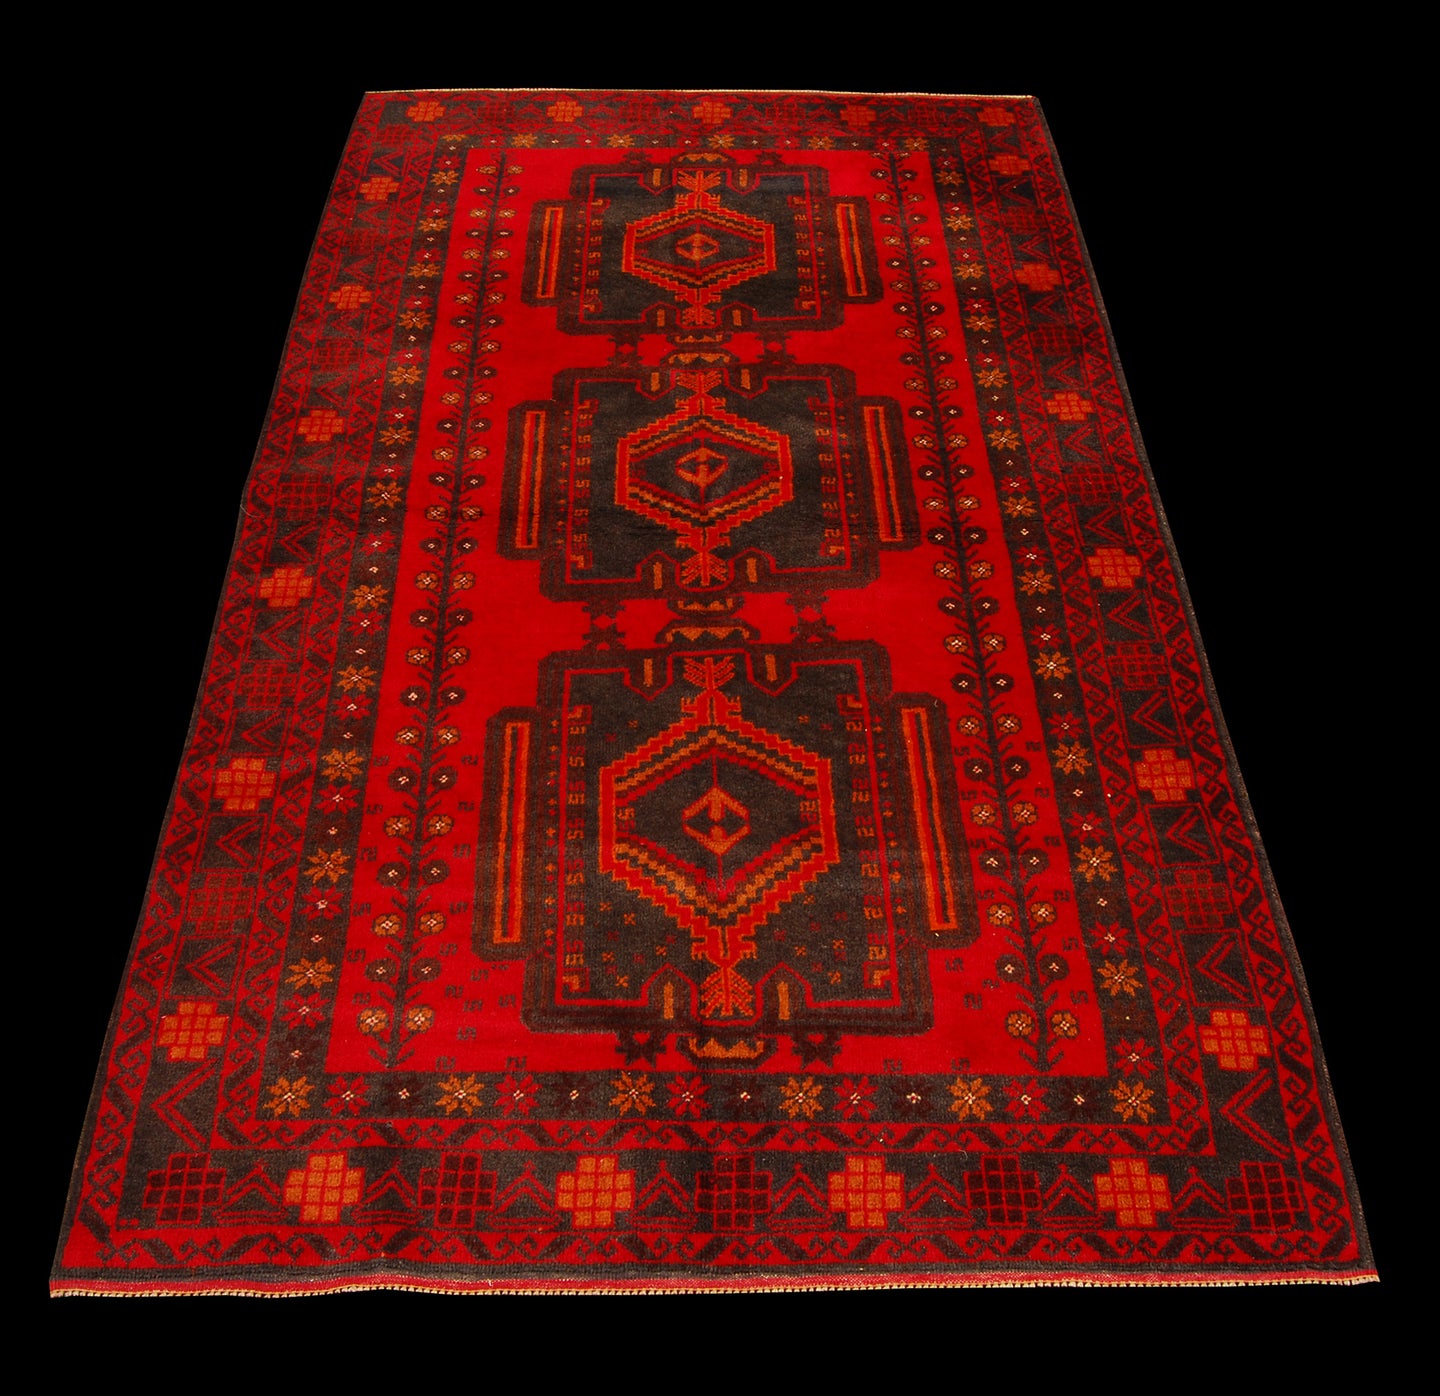 Genuine, Original Pure Wool Rug Rustic Handmad Carpet CM 192x111